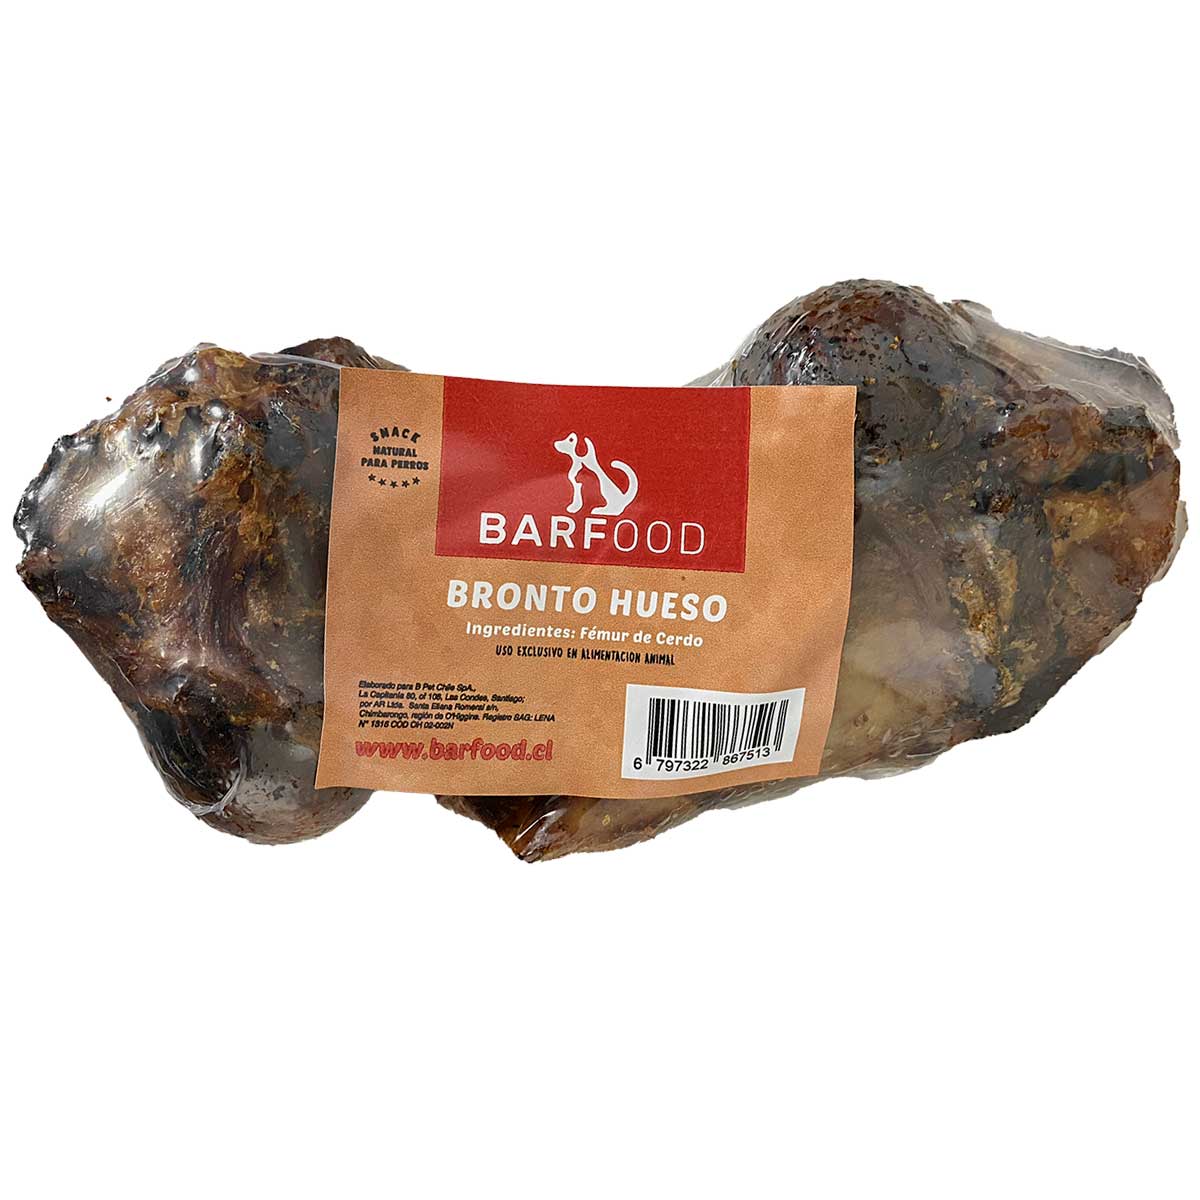 BarFood- Bronto hueso cerdo (2 unidades)